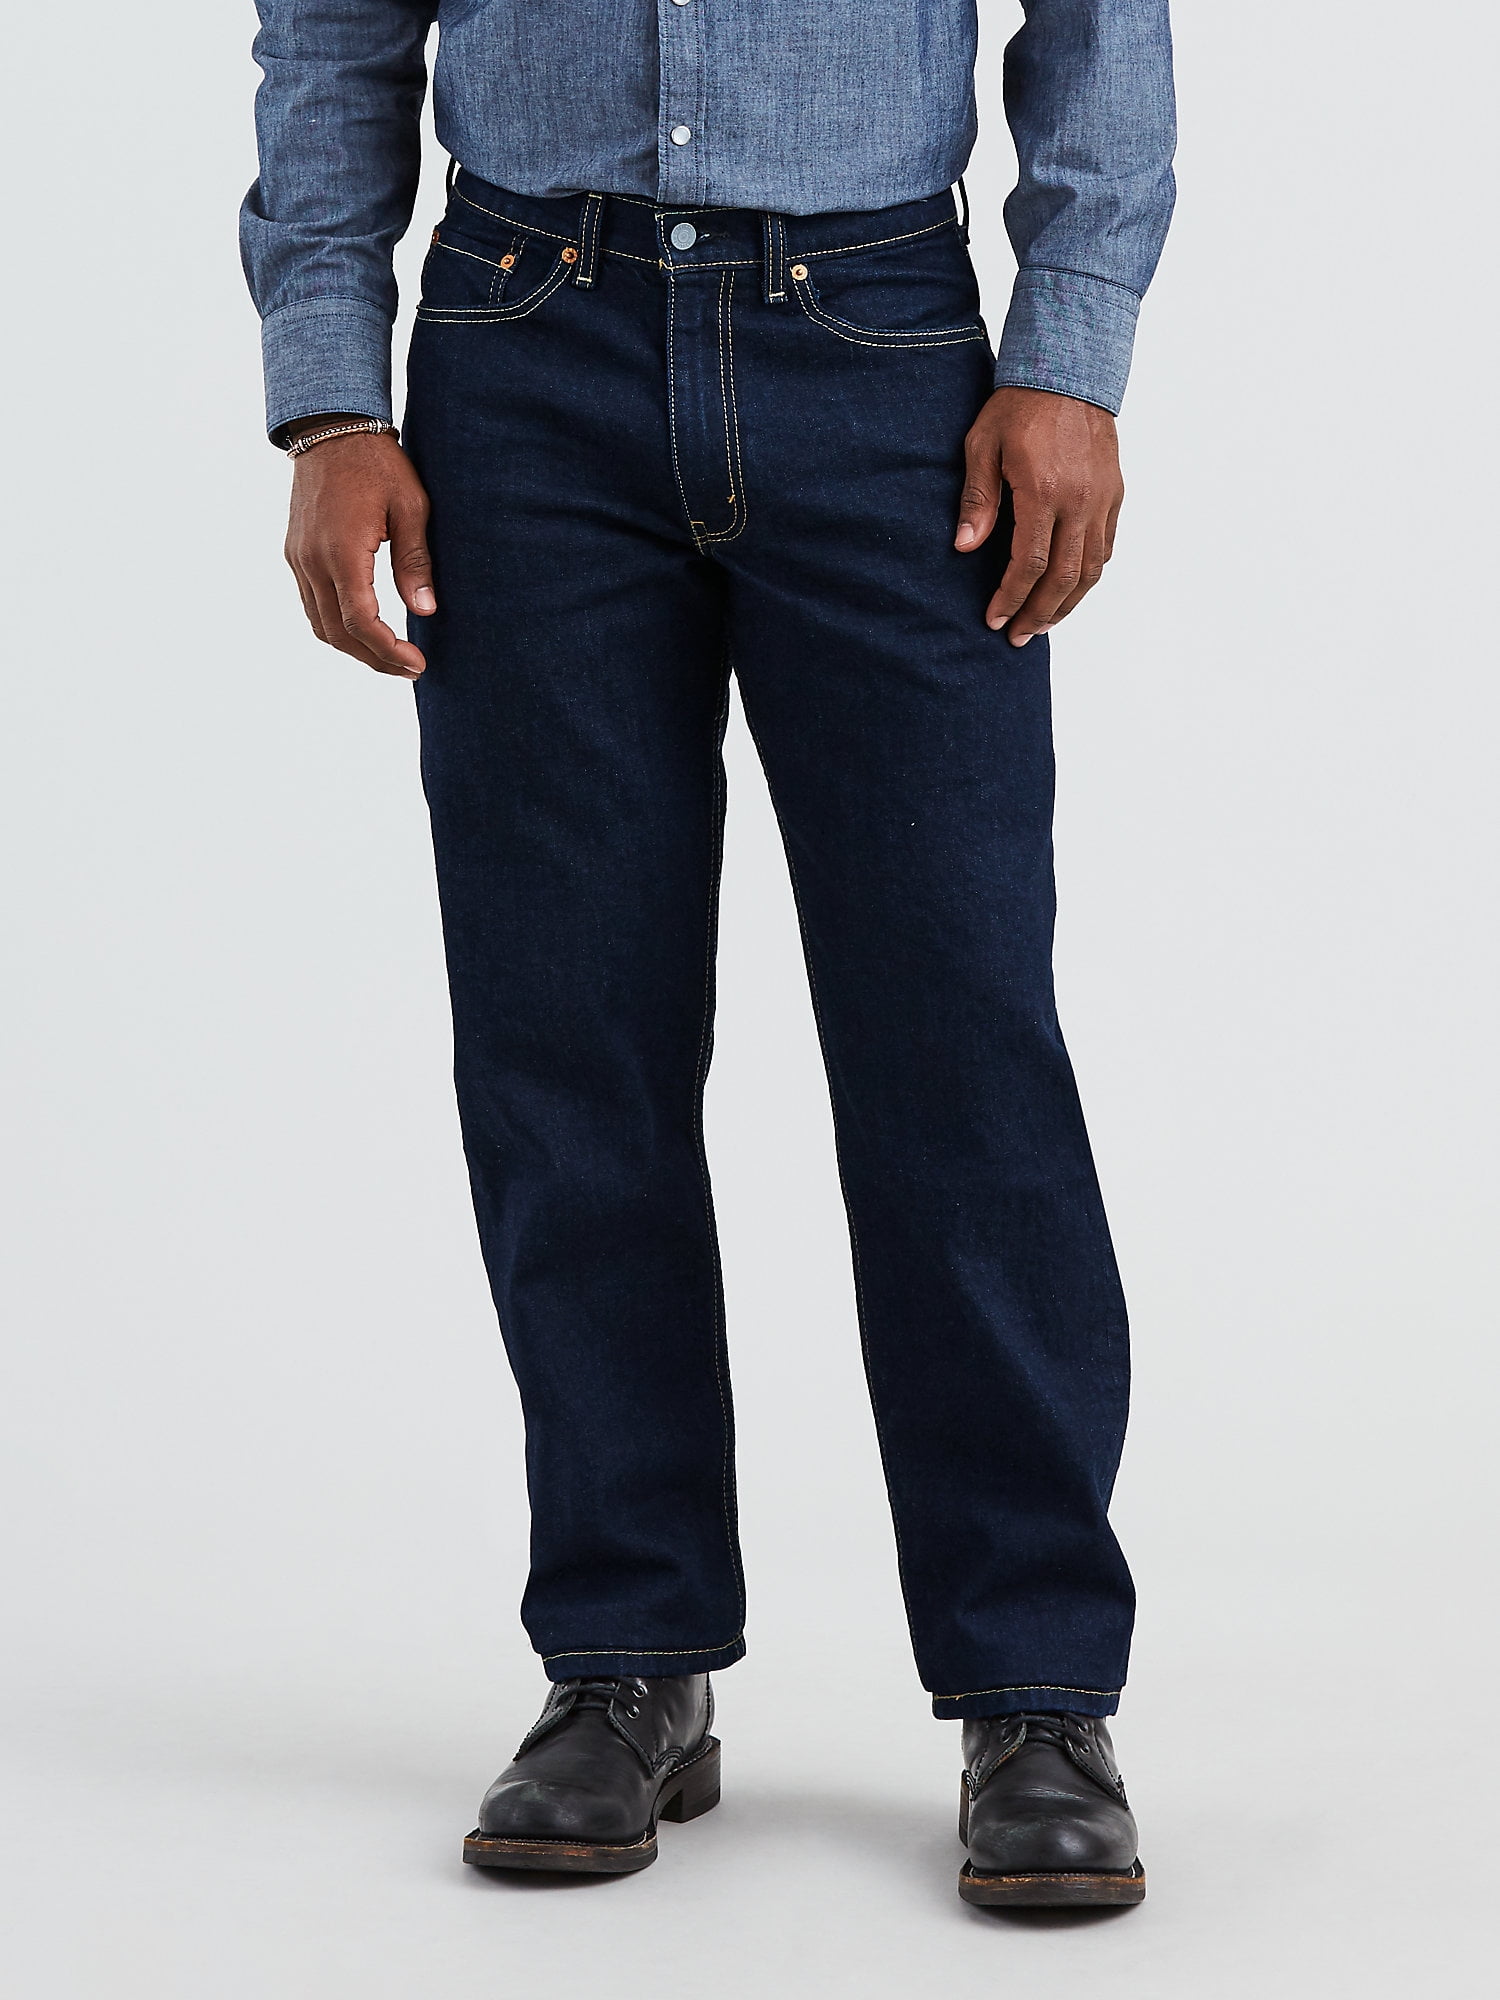 best price on mens levi 550 jeans